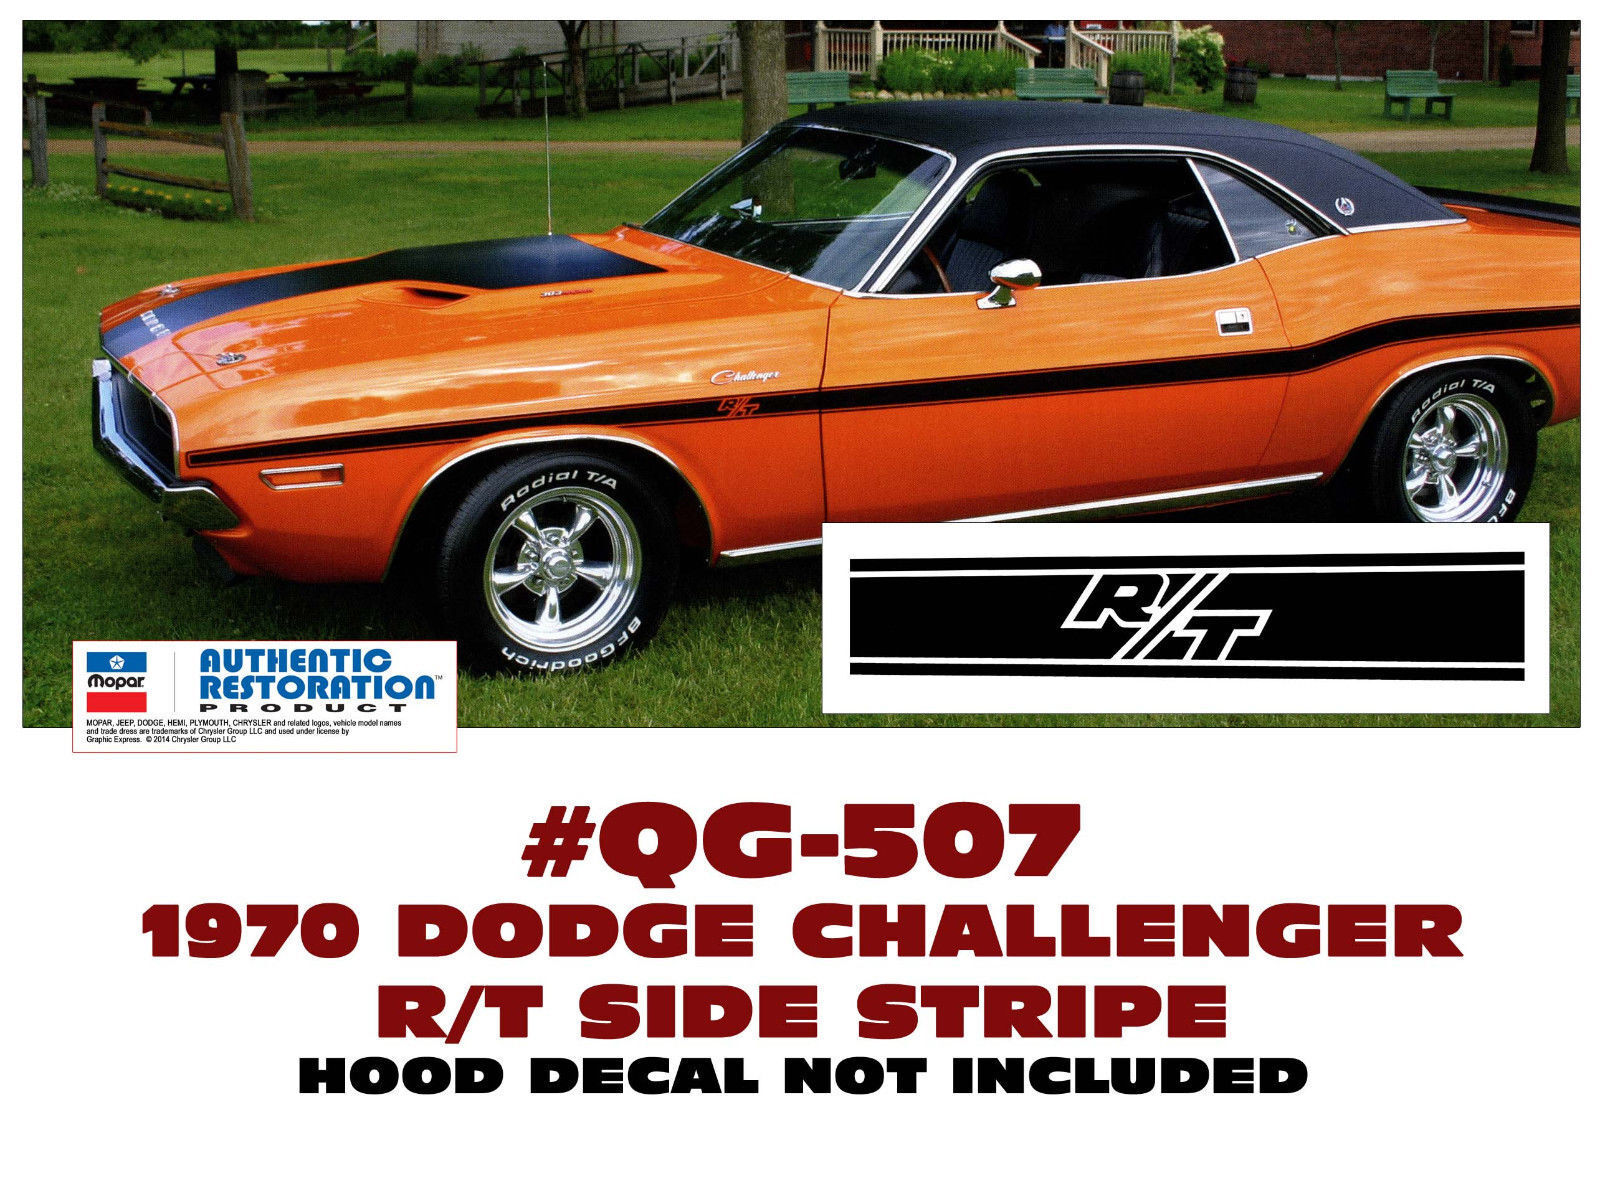 GE-QG-507 1970 DODGE CHALLENGER - R/T MID BODY SIDE STRIPE - R/T LOGO - DECAL